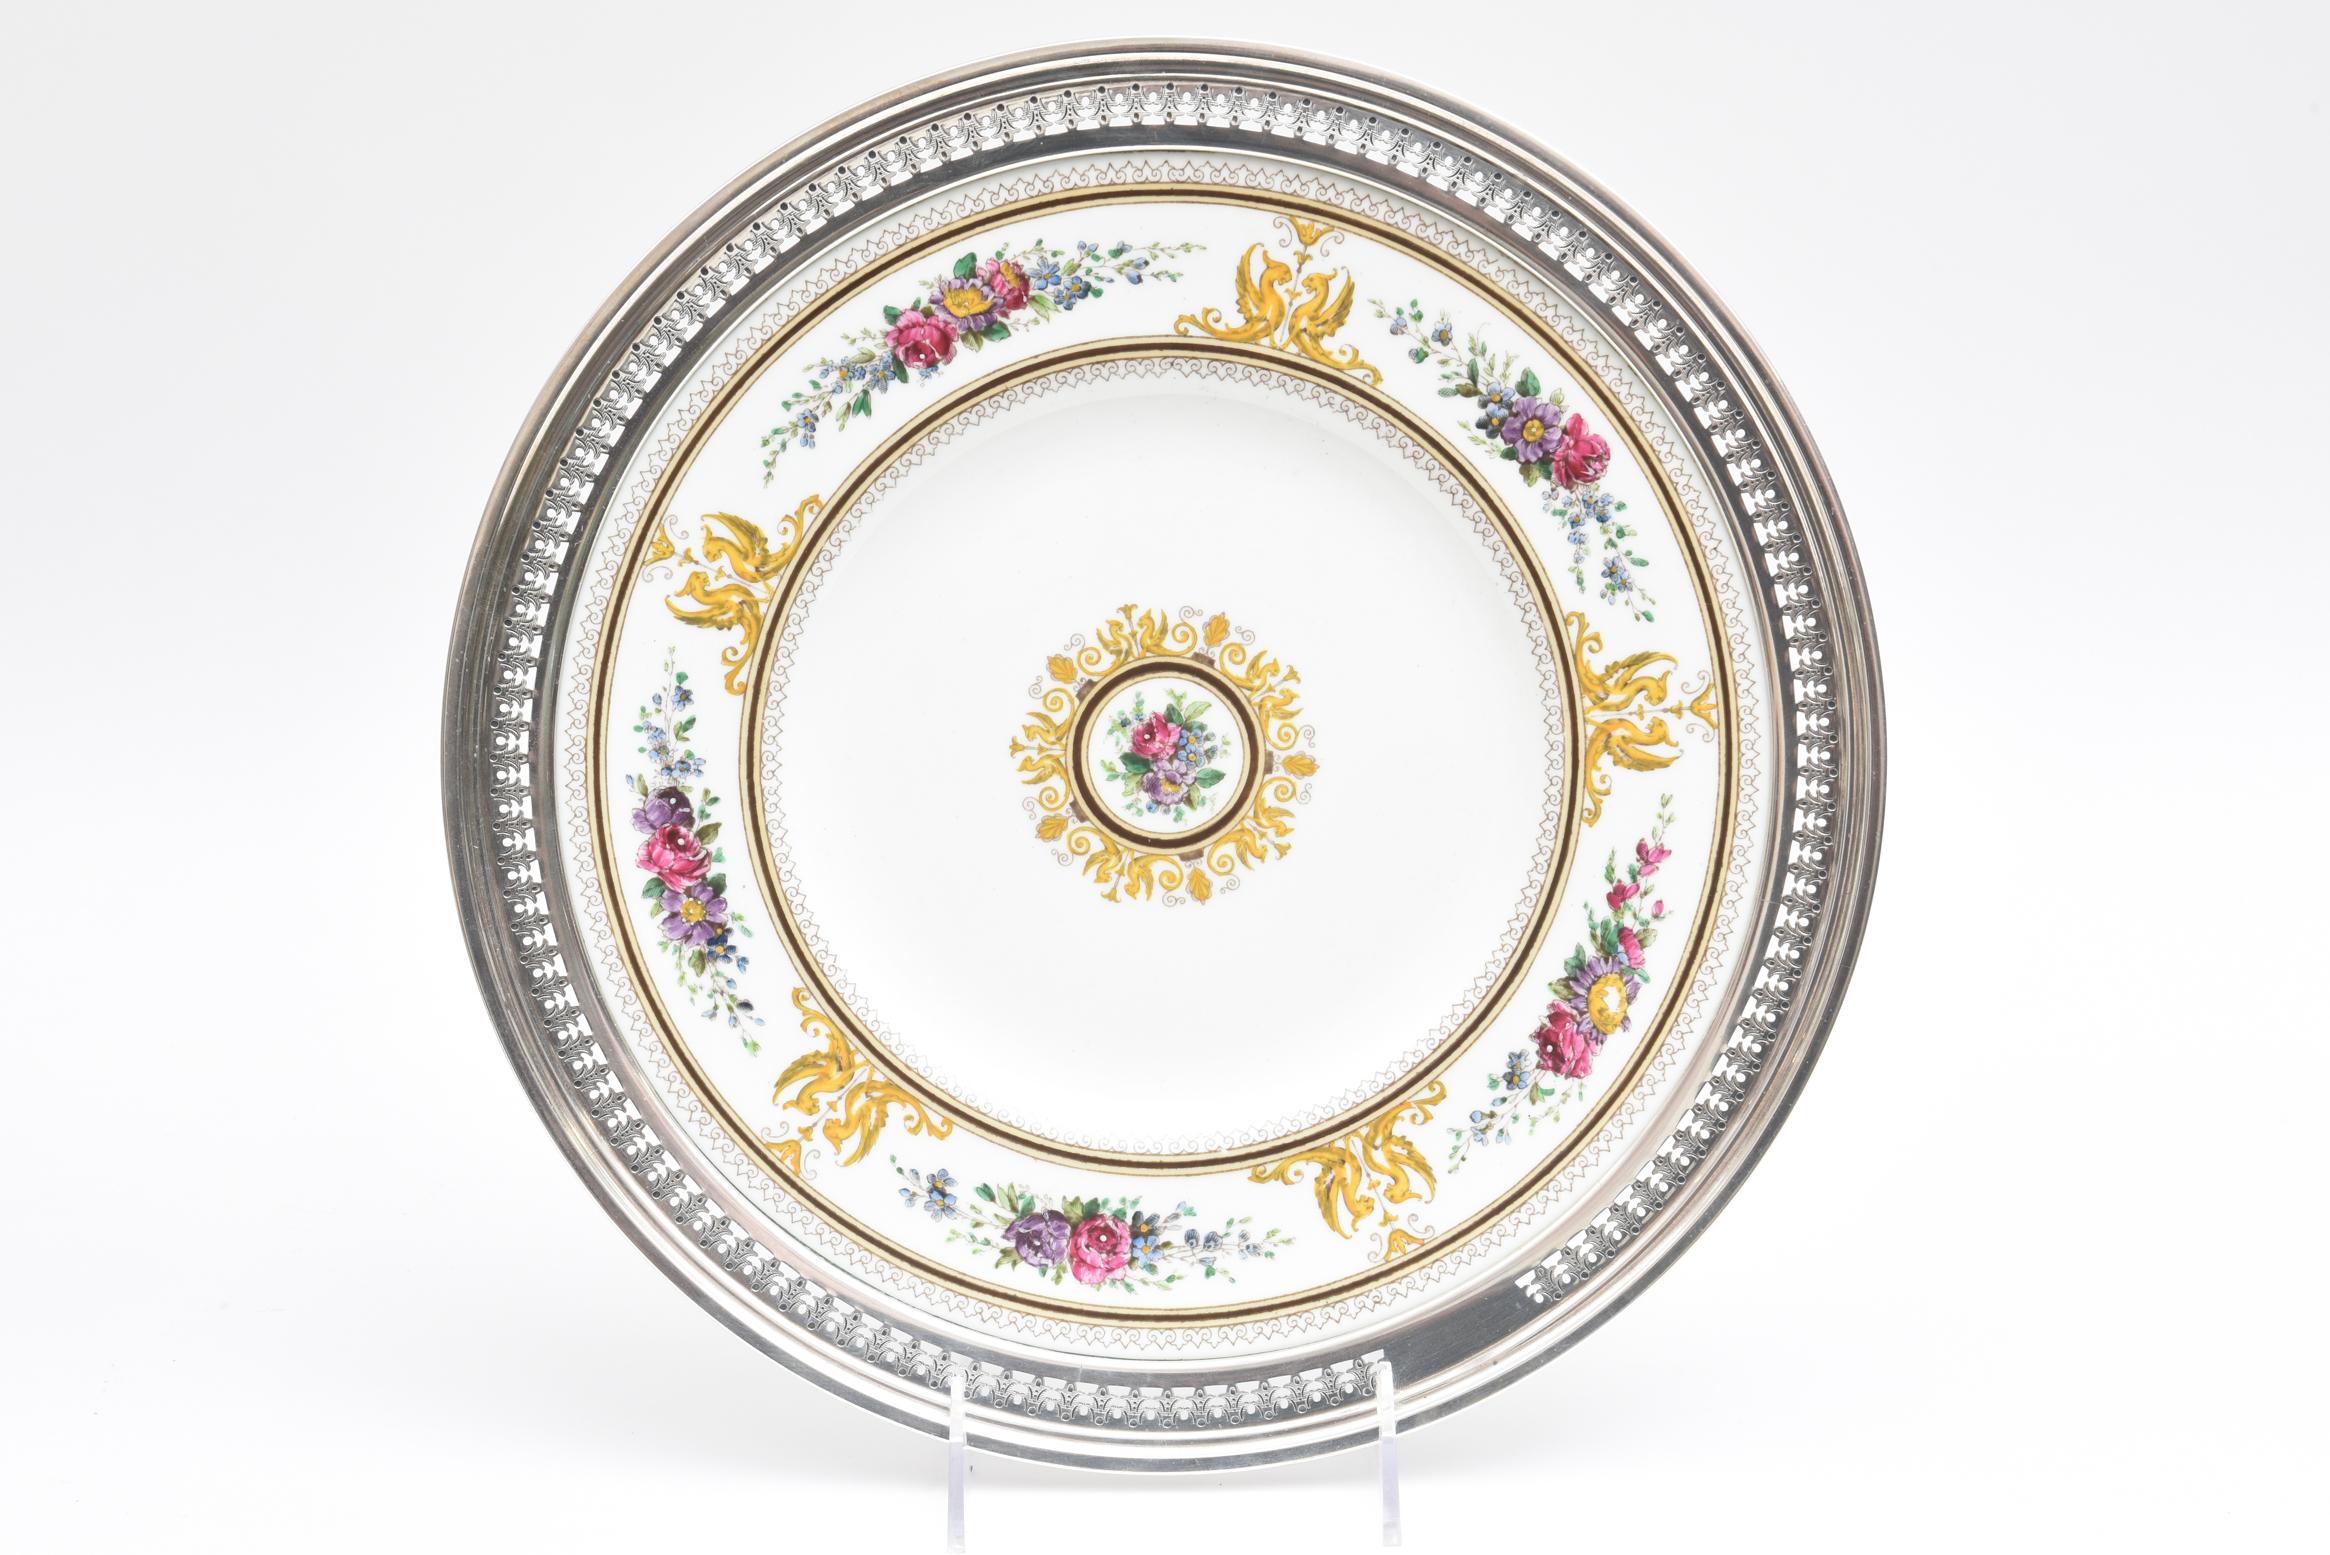 Belle Époque Wedgwood Porcelain & Sterling Silver Dessert Service, 12 Plates & 1 Pastry Plate